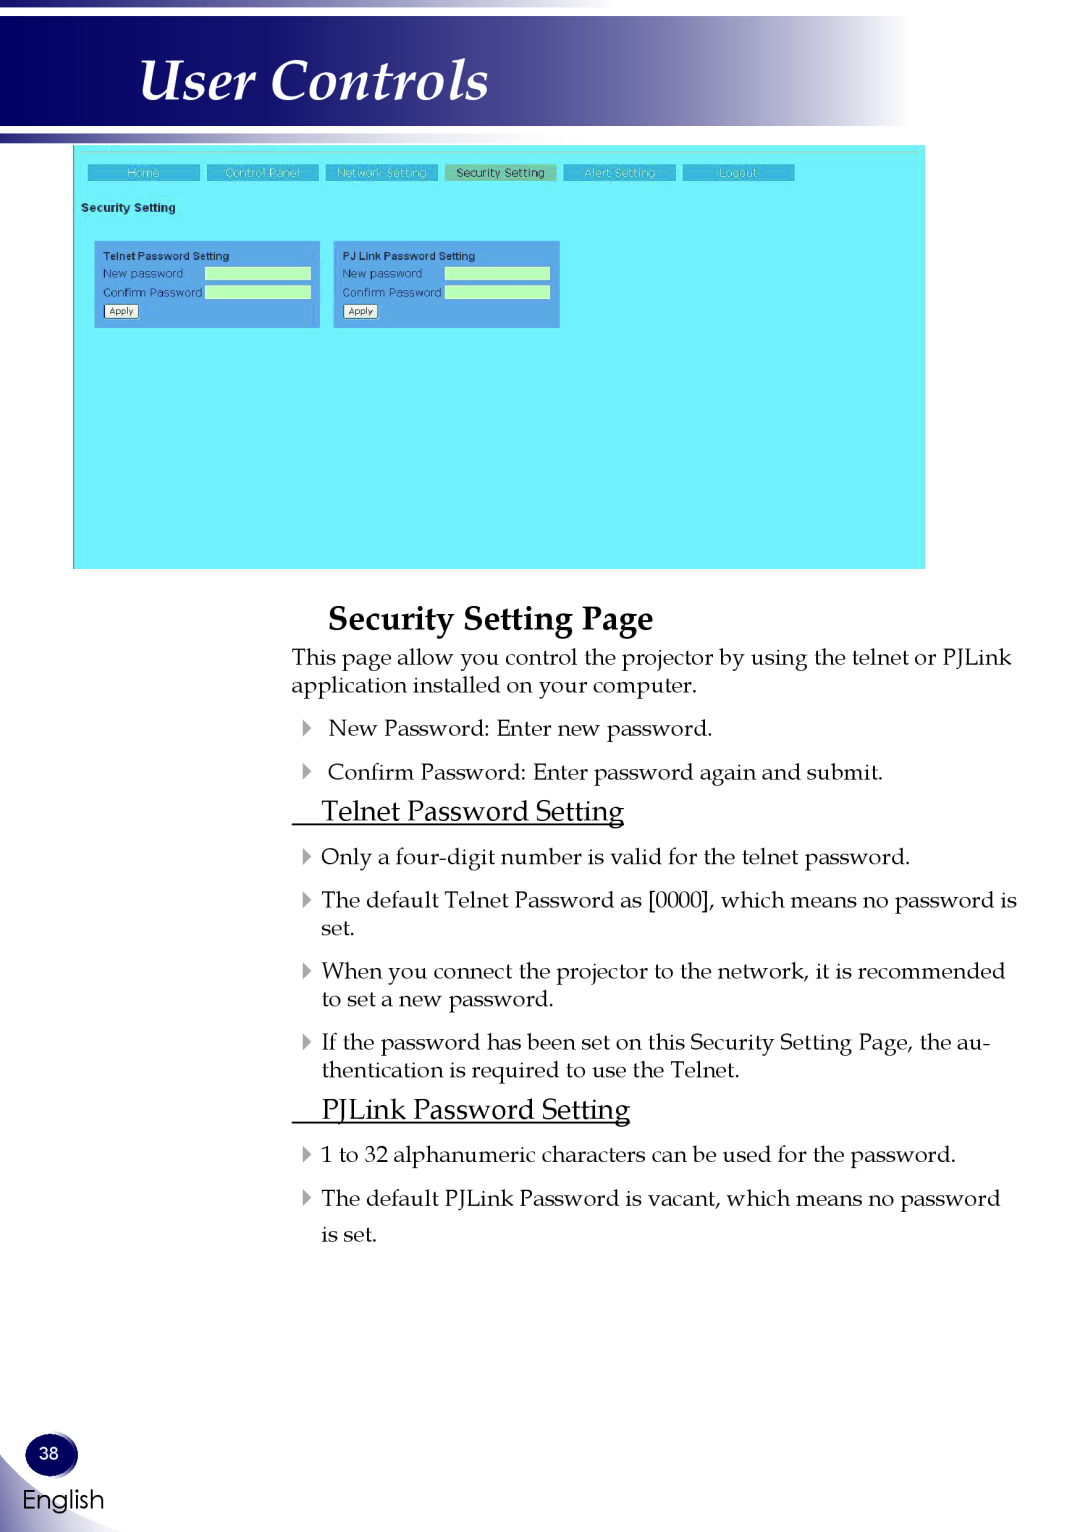 Sanyo PDG-DXL100 Security Setting Page, Telnet Password Setting, PJLink Password Setting, User Controls, English 